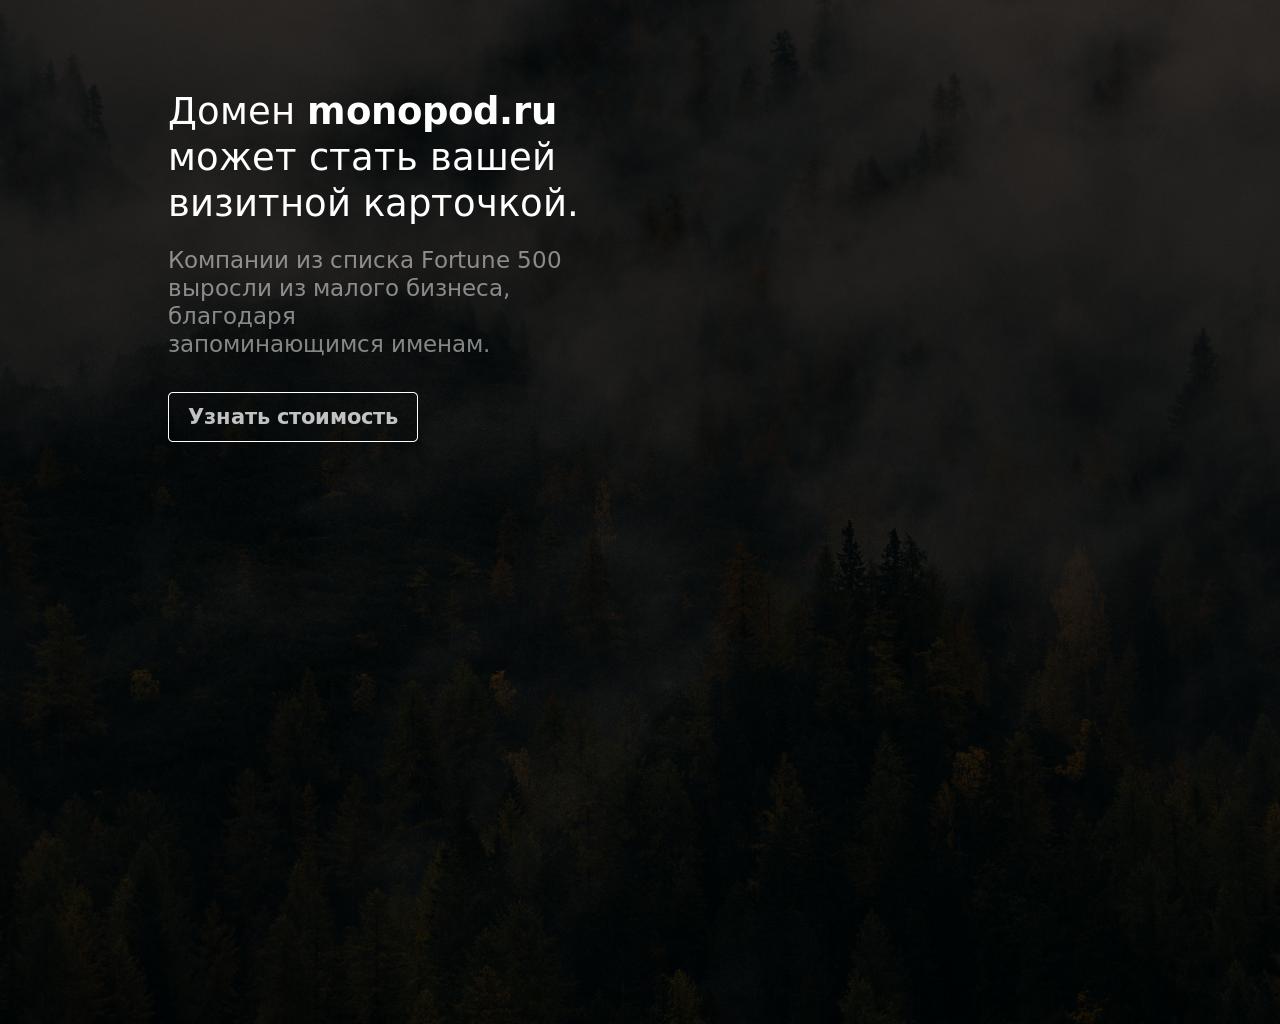 Изображение сайта monopod.ru в разрешении 1280x1024